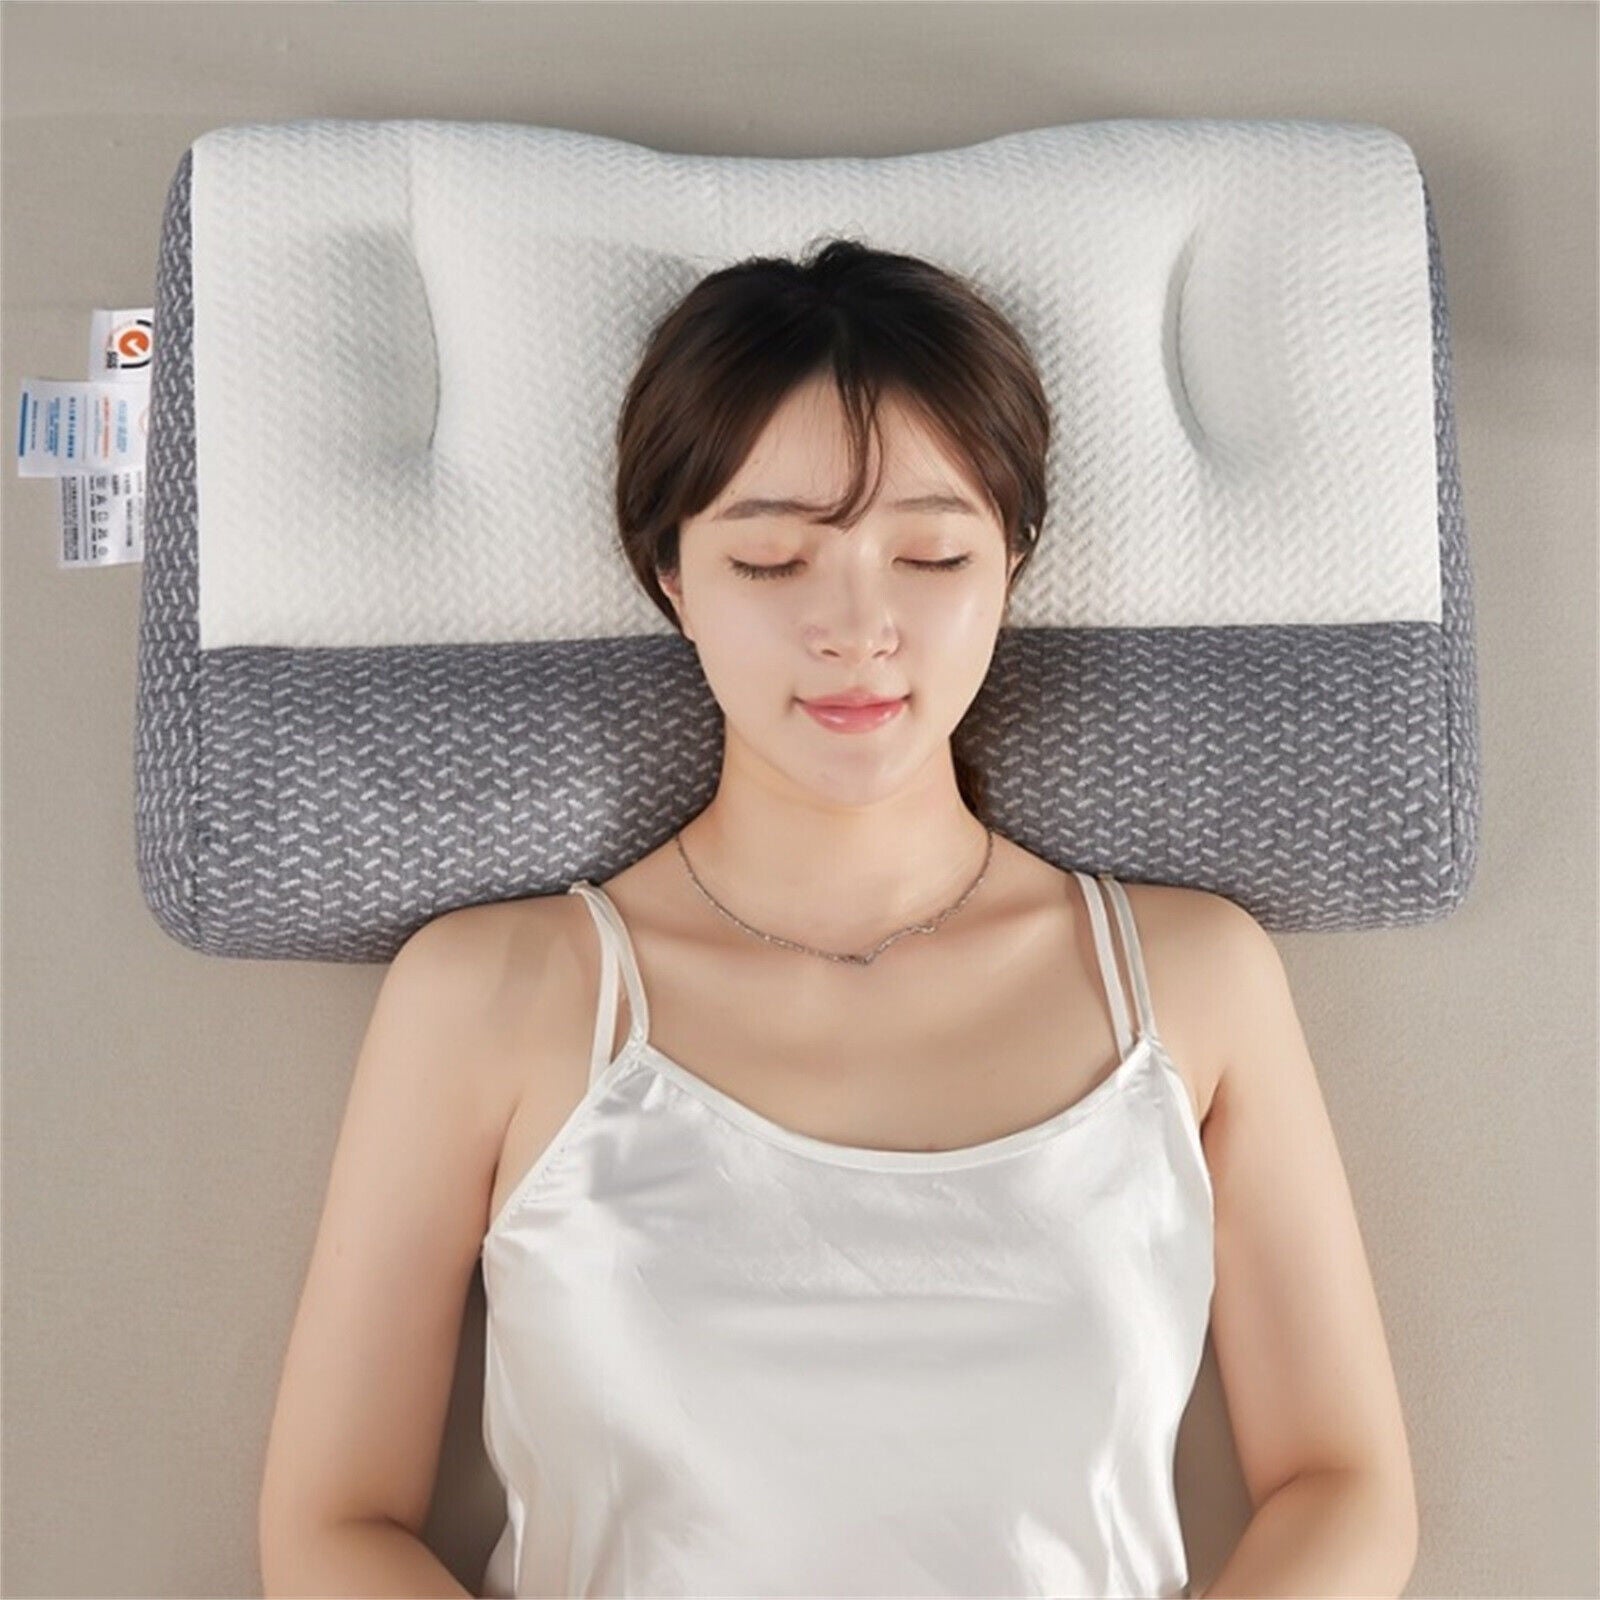 Australian Made -  Pain Relief Ergonomic Pillow